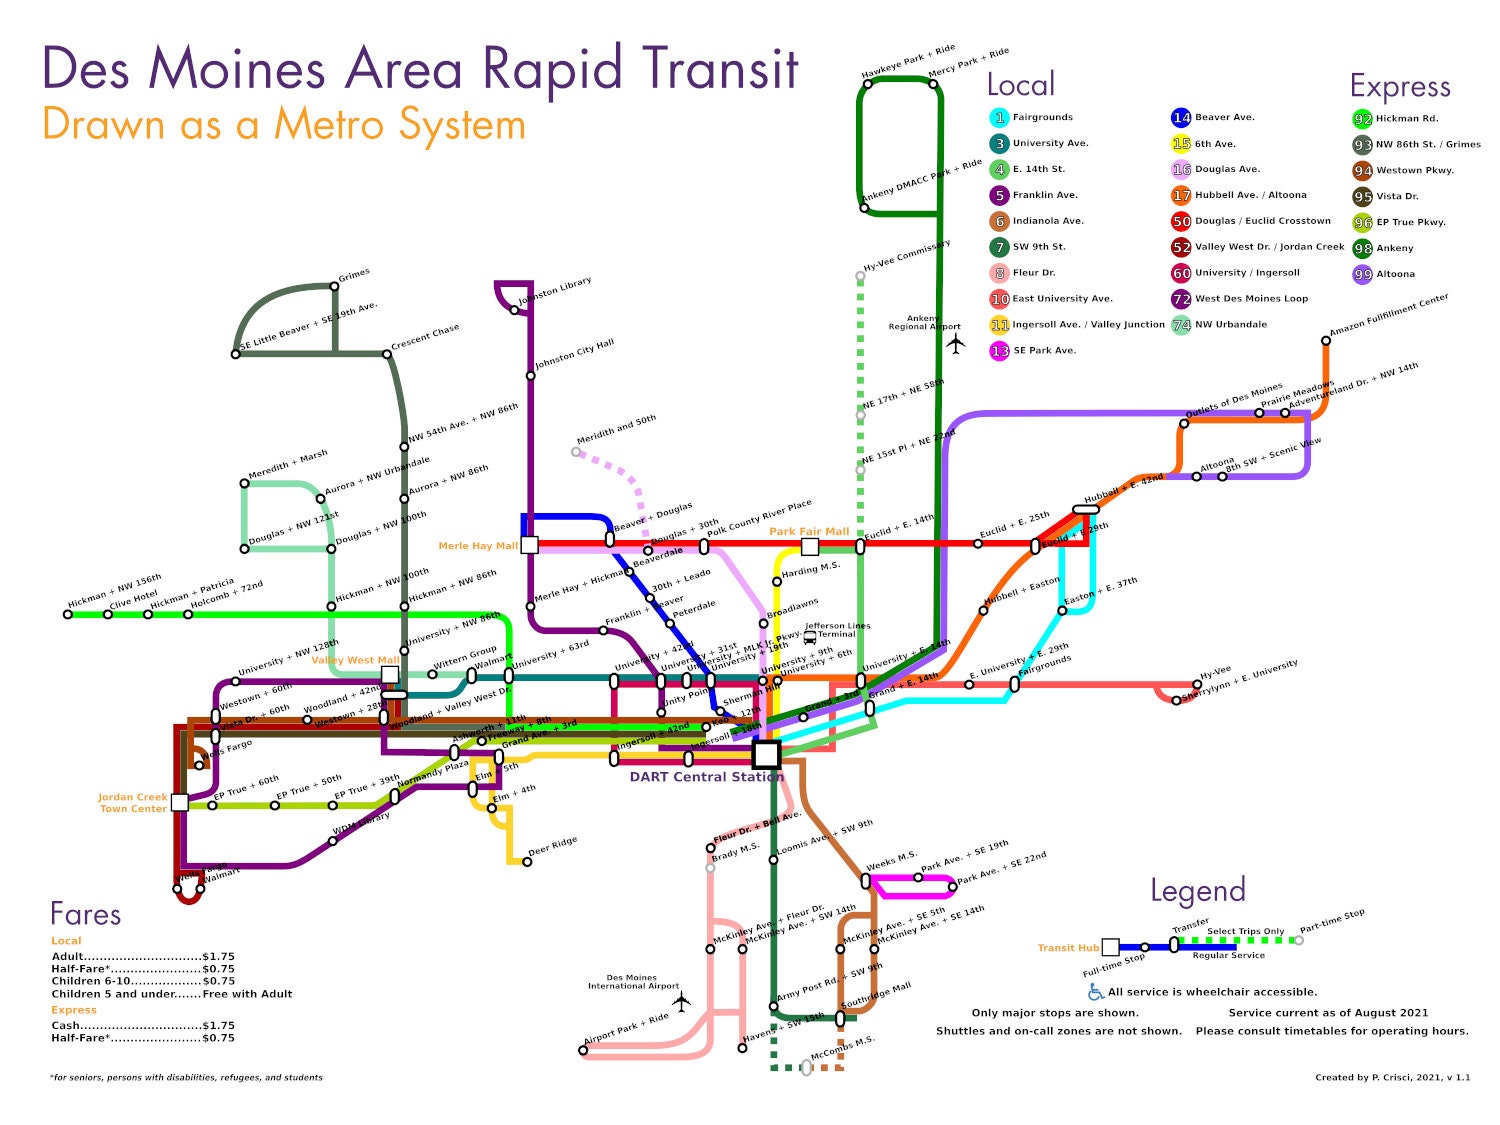 DART Des Moines Area Rapid Transit Bus as Metro Subway System image